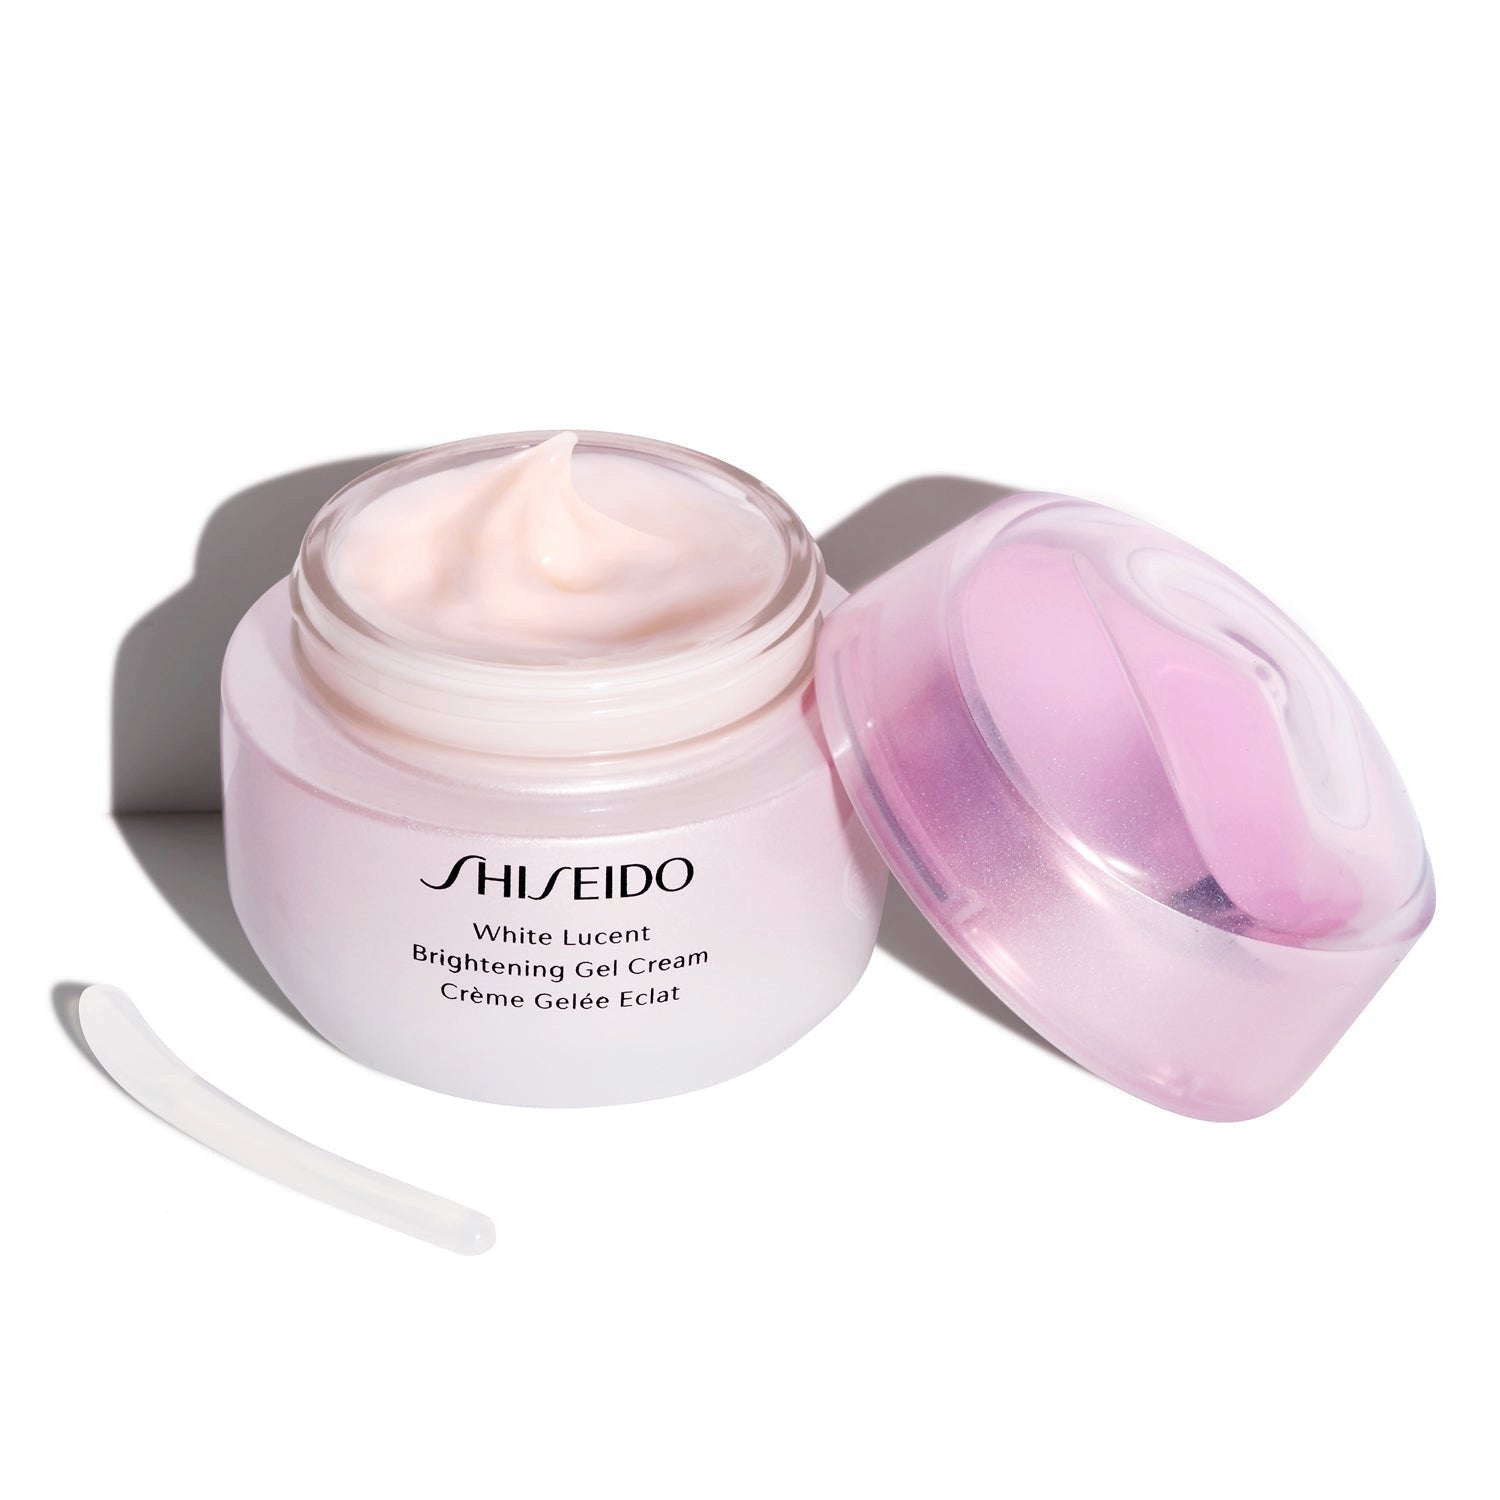 Shiseido White Lucent Gel Cream Hydrating Beauty Face Cream 50g 